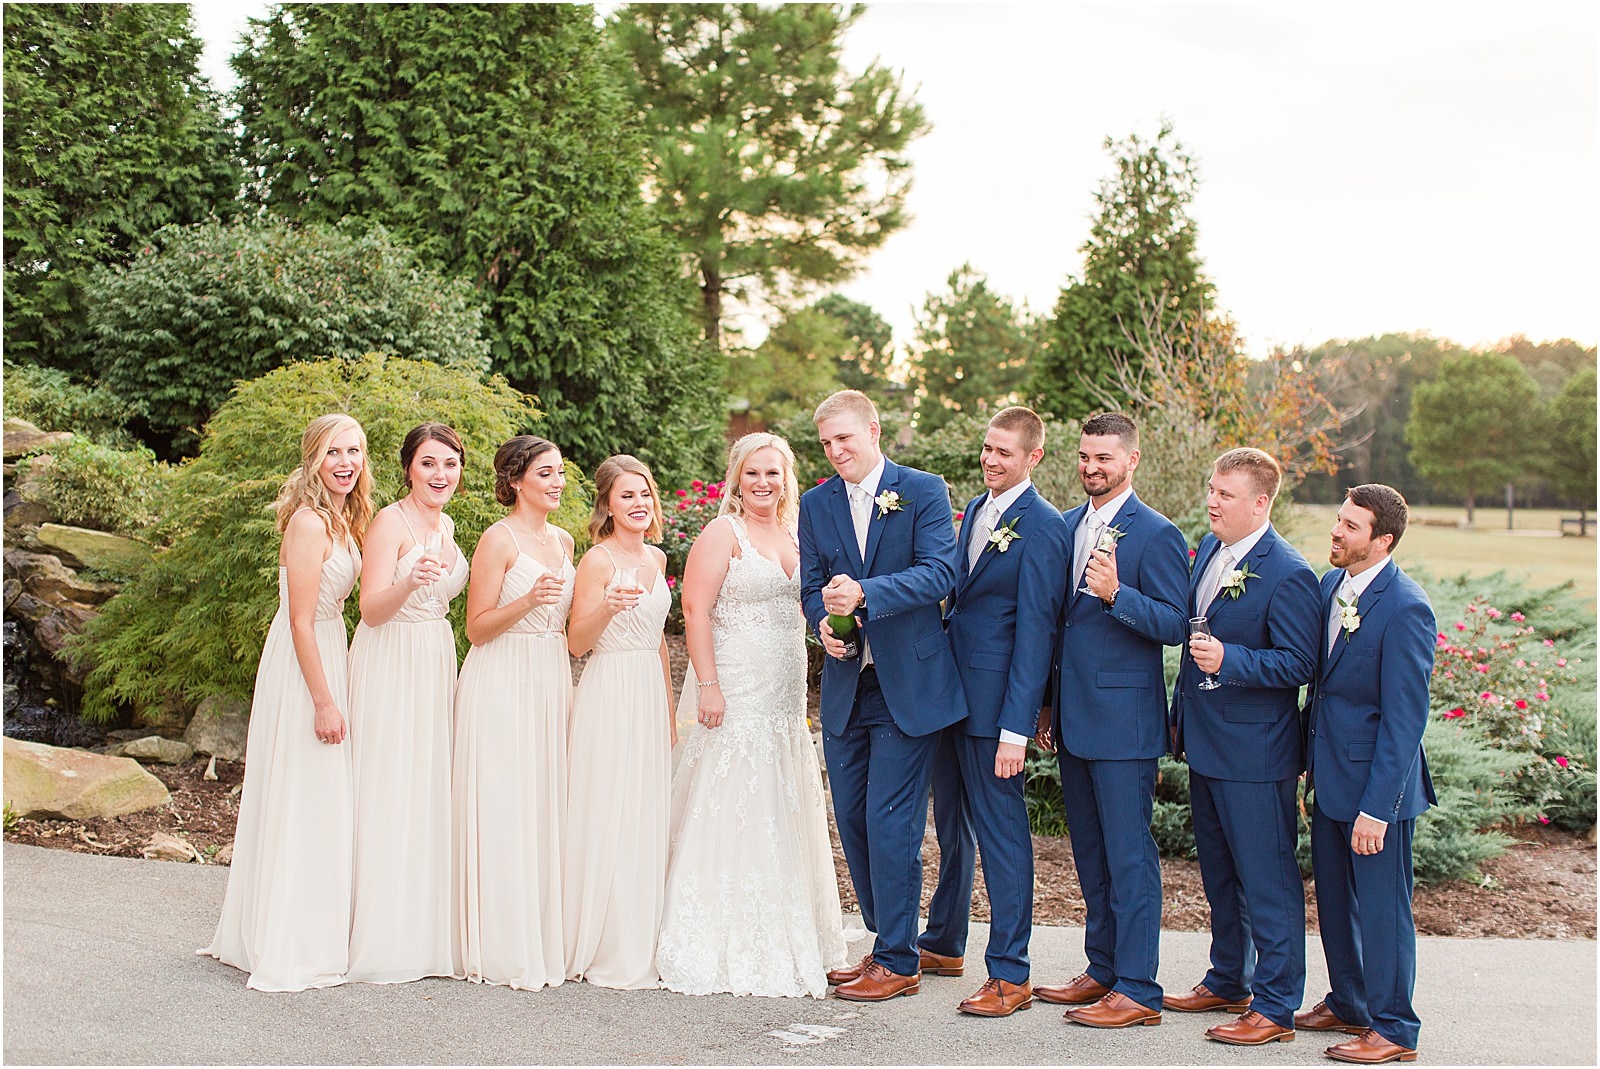 Kelsey and Caleb | Walkers Bluff Winery Wedding | Bret and Brandie Photography085.jpg